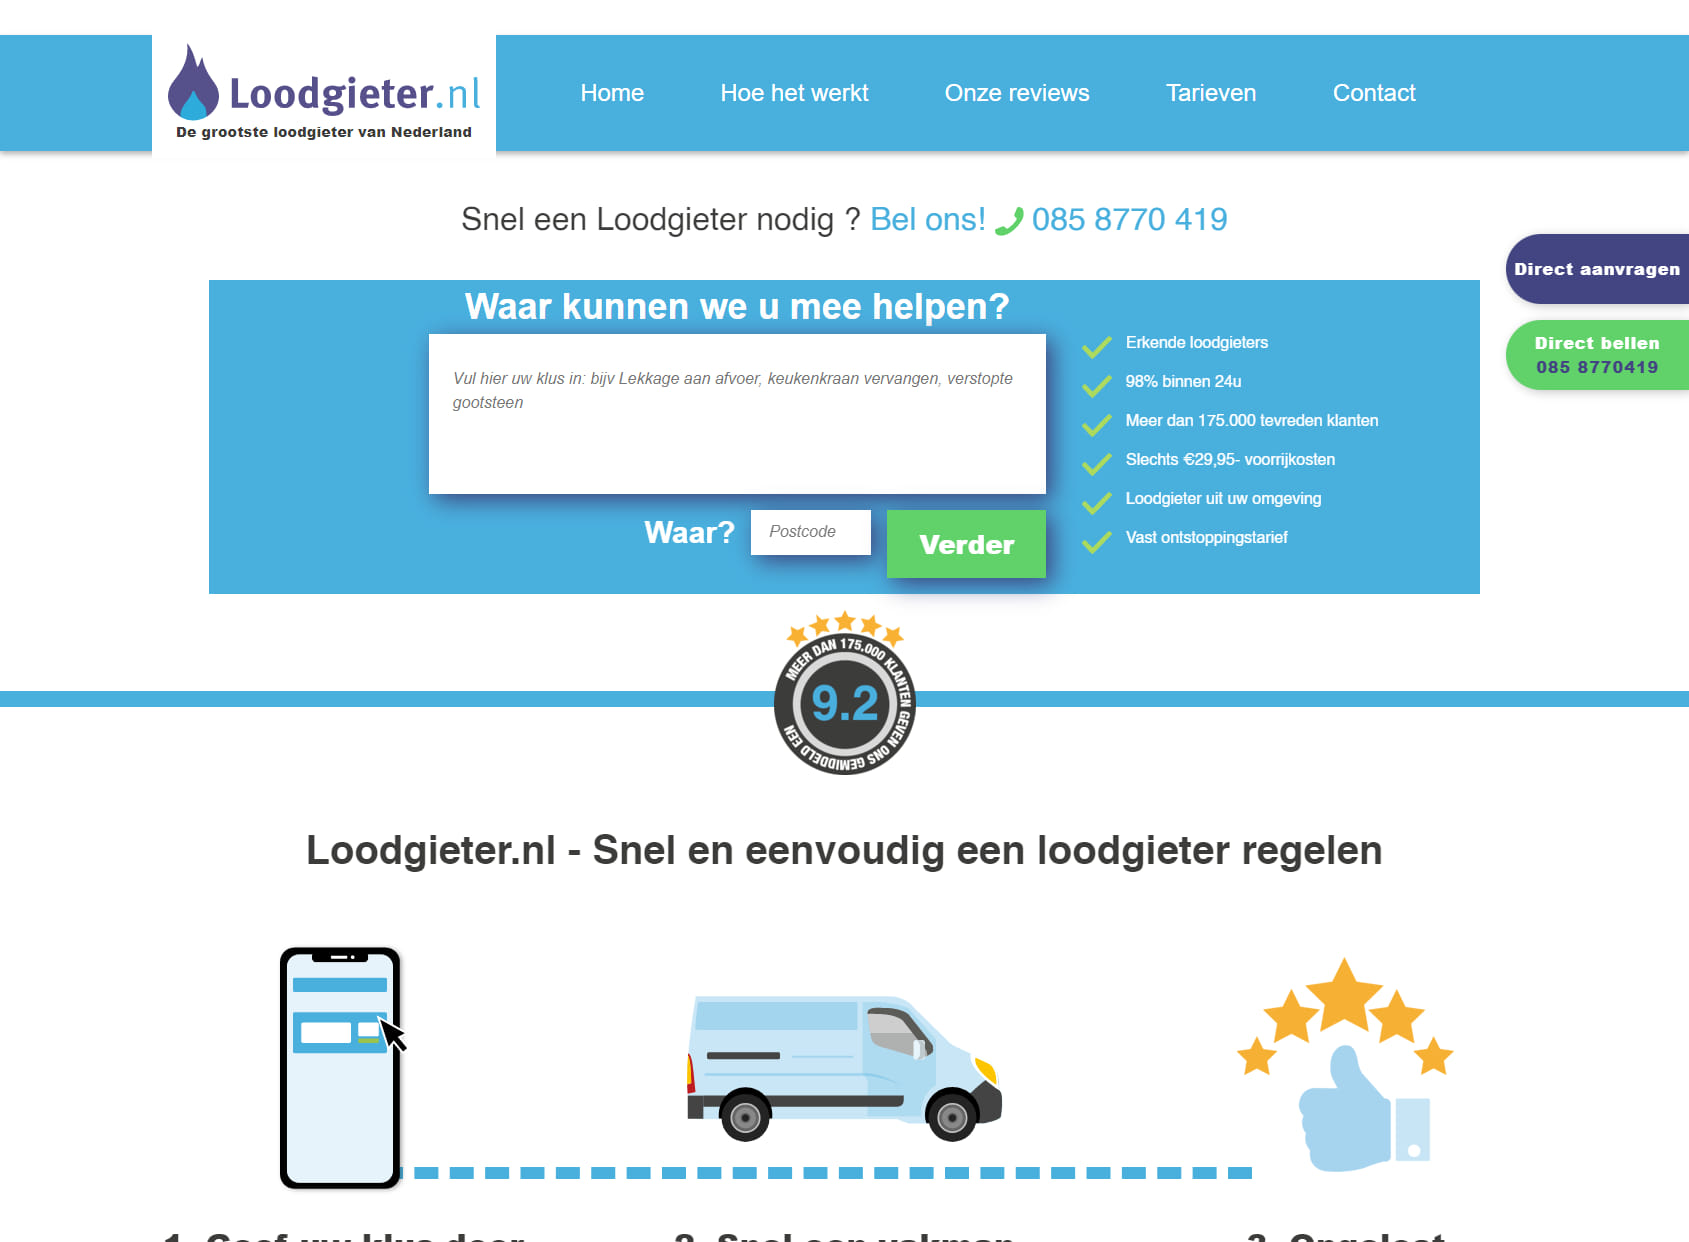 Loodgieter.nl